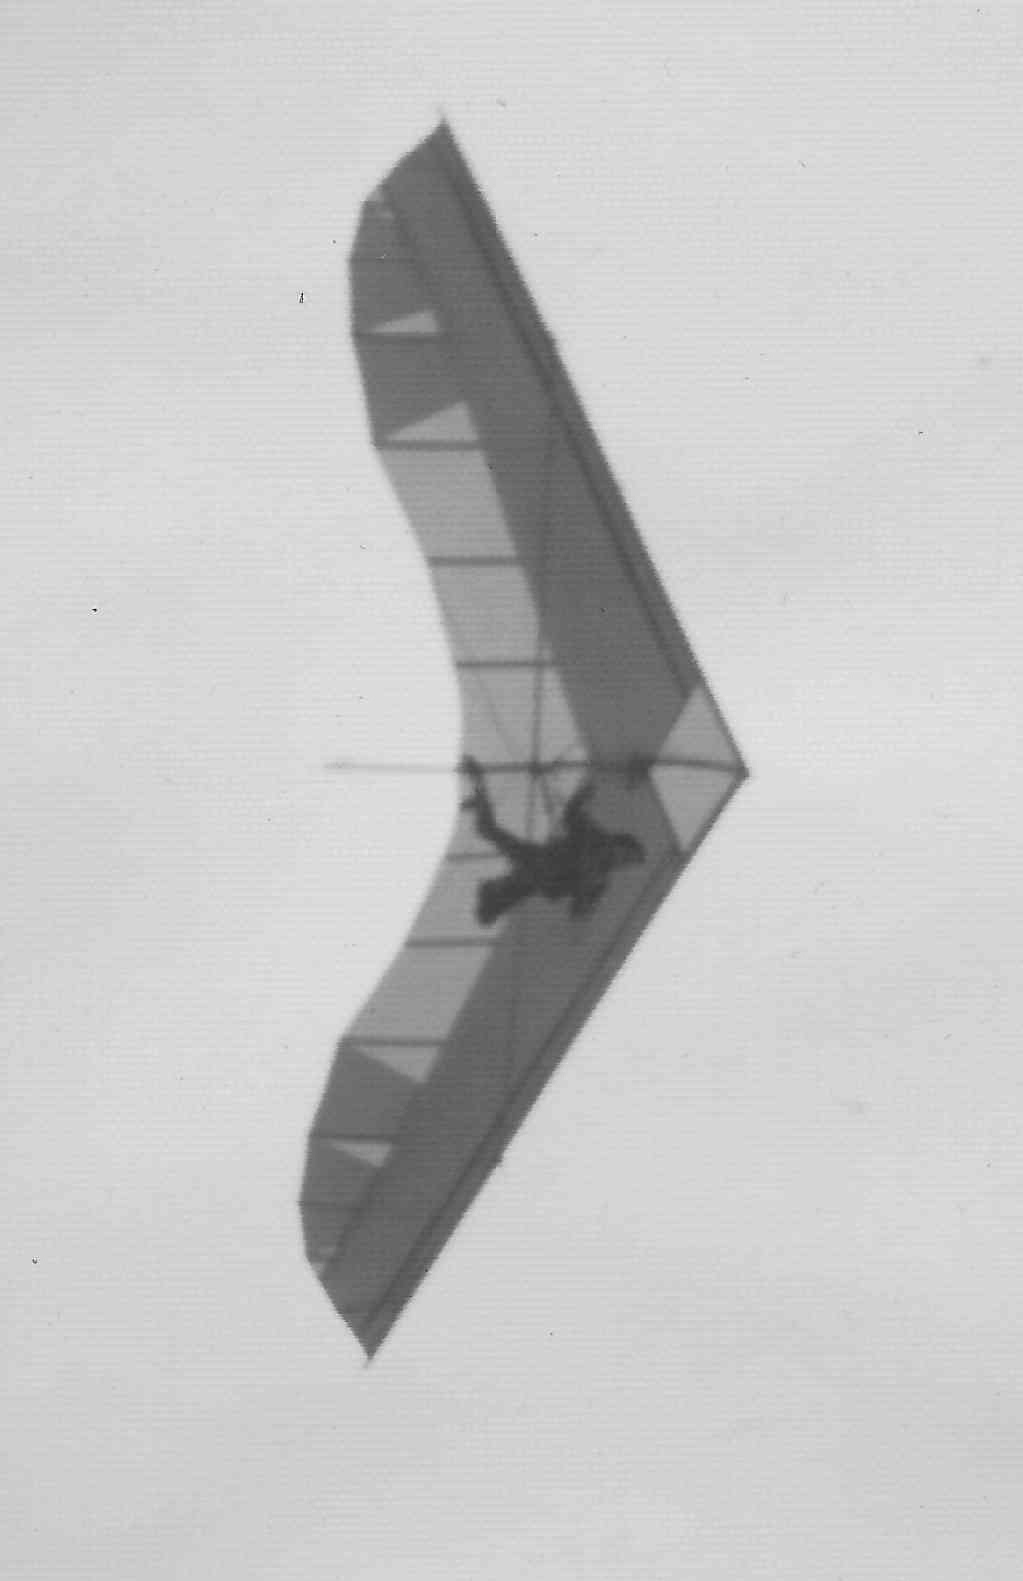 Paul Hamilton flying his Razr patented wing initial design